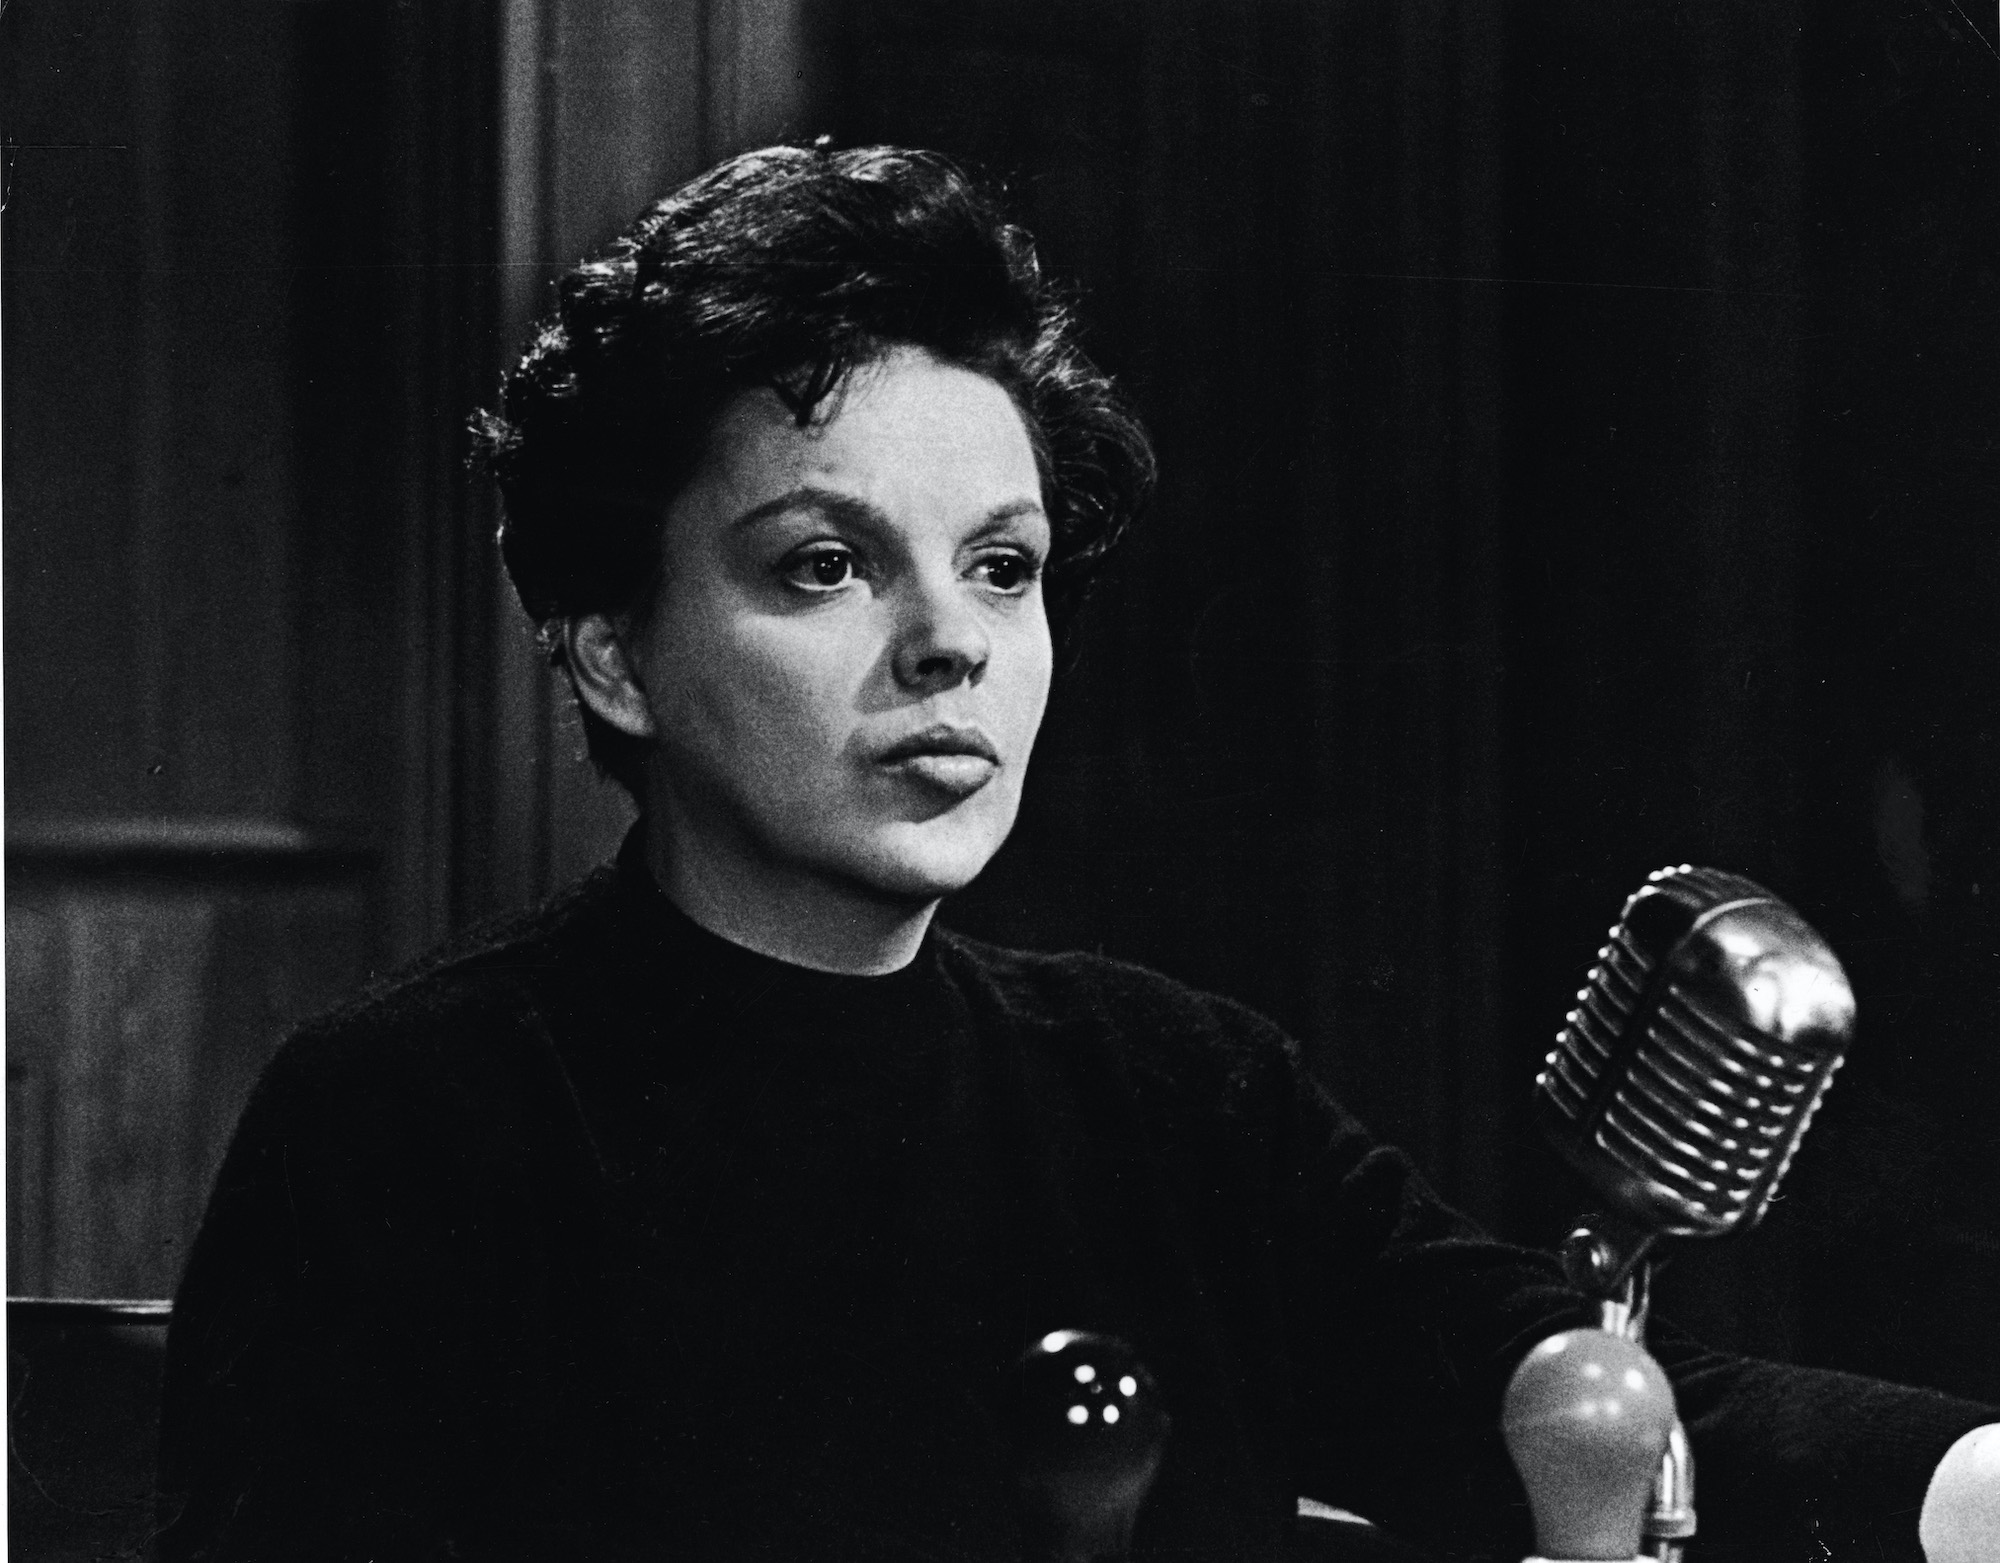 Judy Garland Was Given Amphetamine-Based Diet Pills From Her Studio